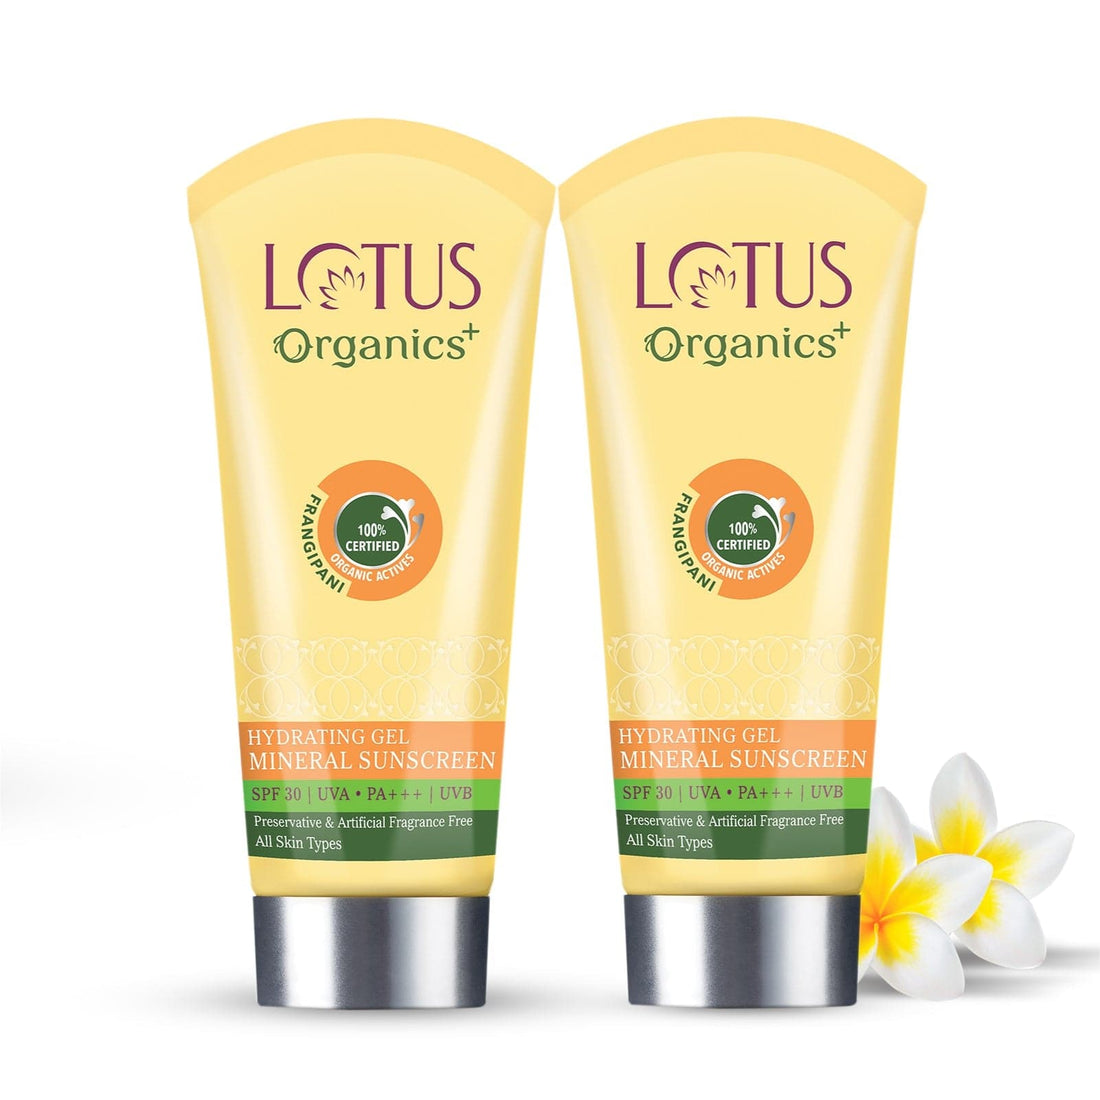 Lotus Organics+ Mineral Sunscreen: SPF 30 + SPF 30 - Lotus Organics